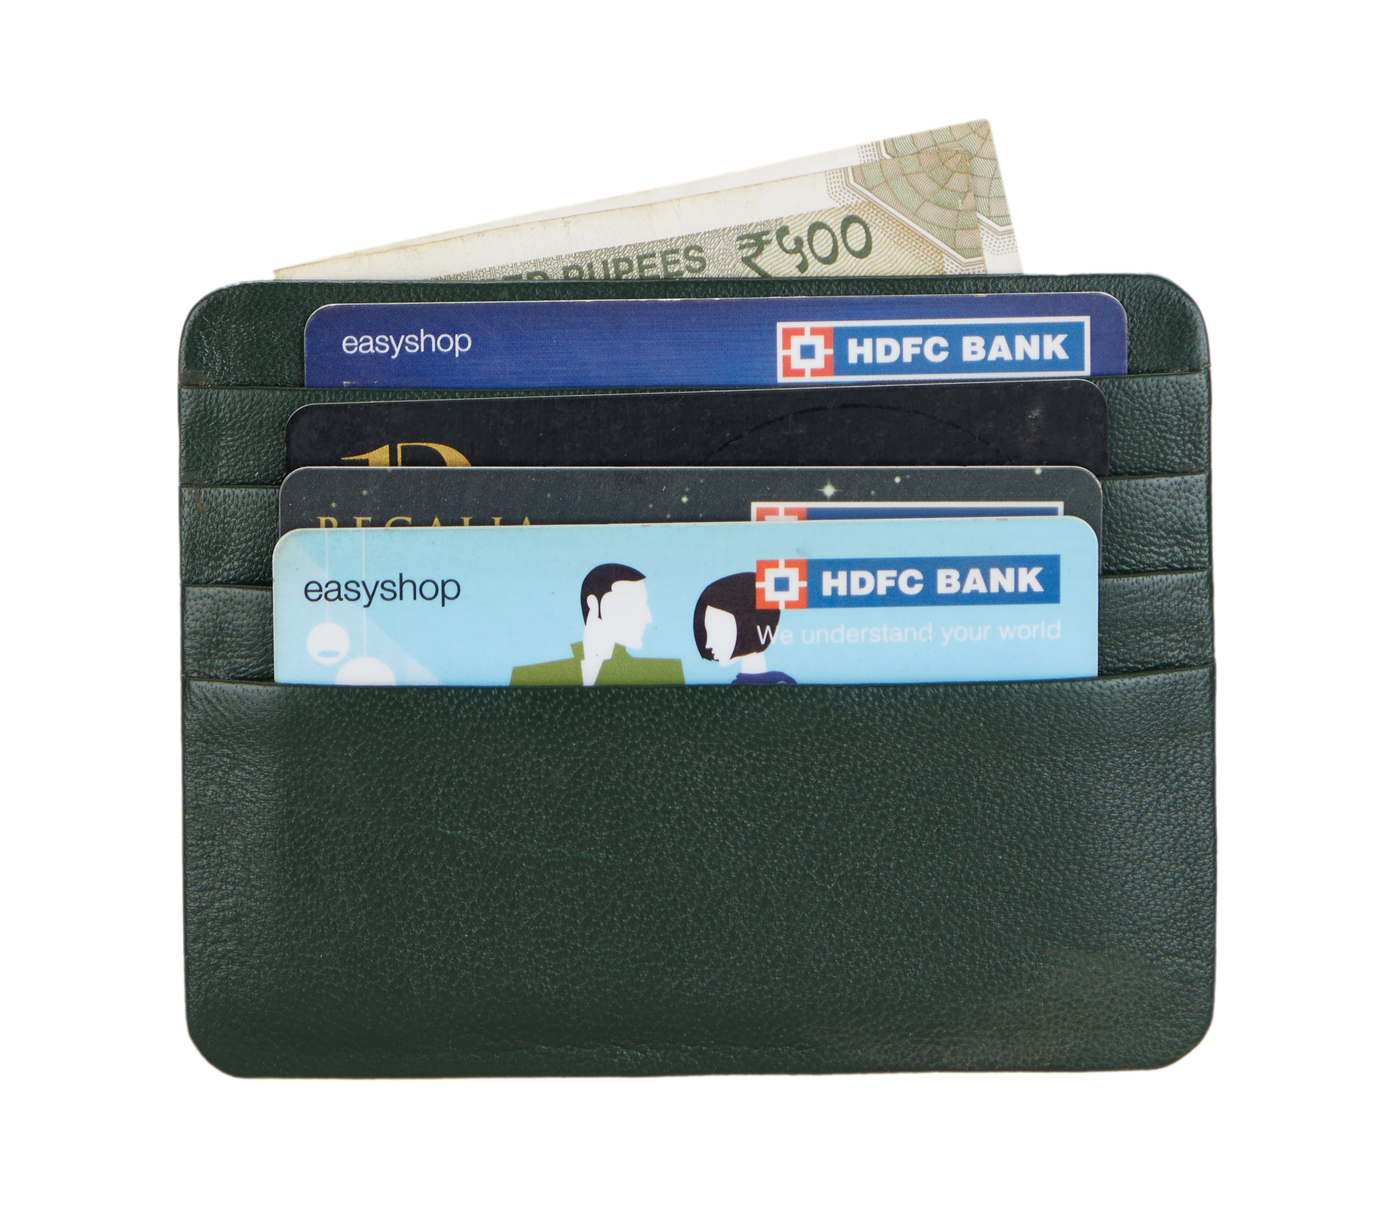 VW7--Ultra Slim Credit Card Case in Genuine Leather - Green